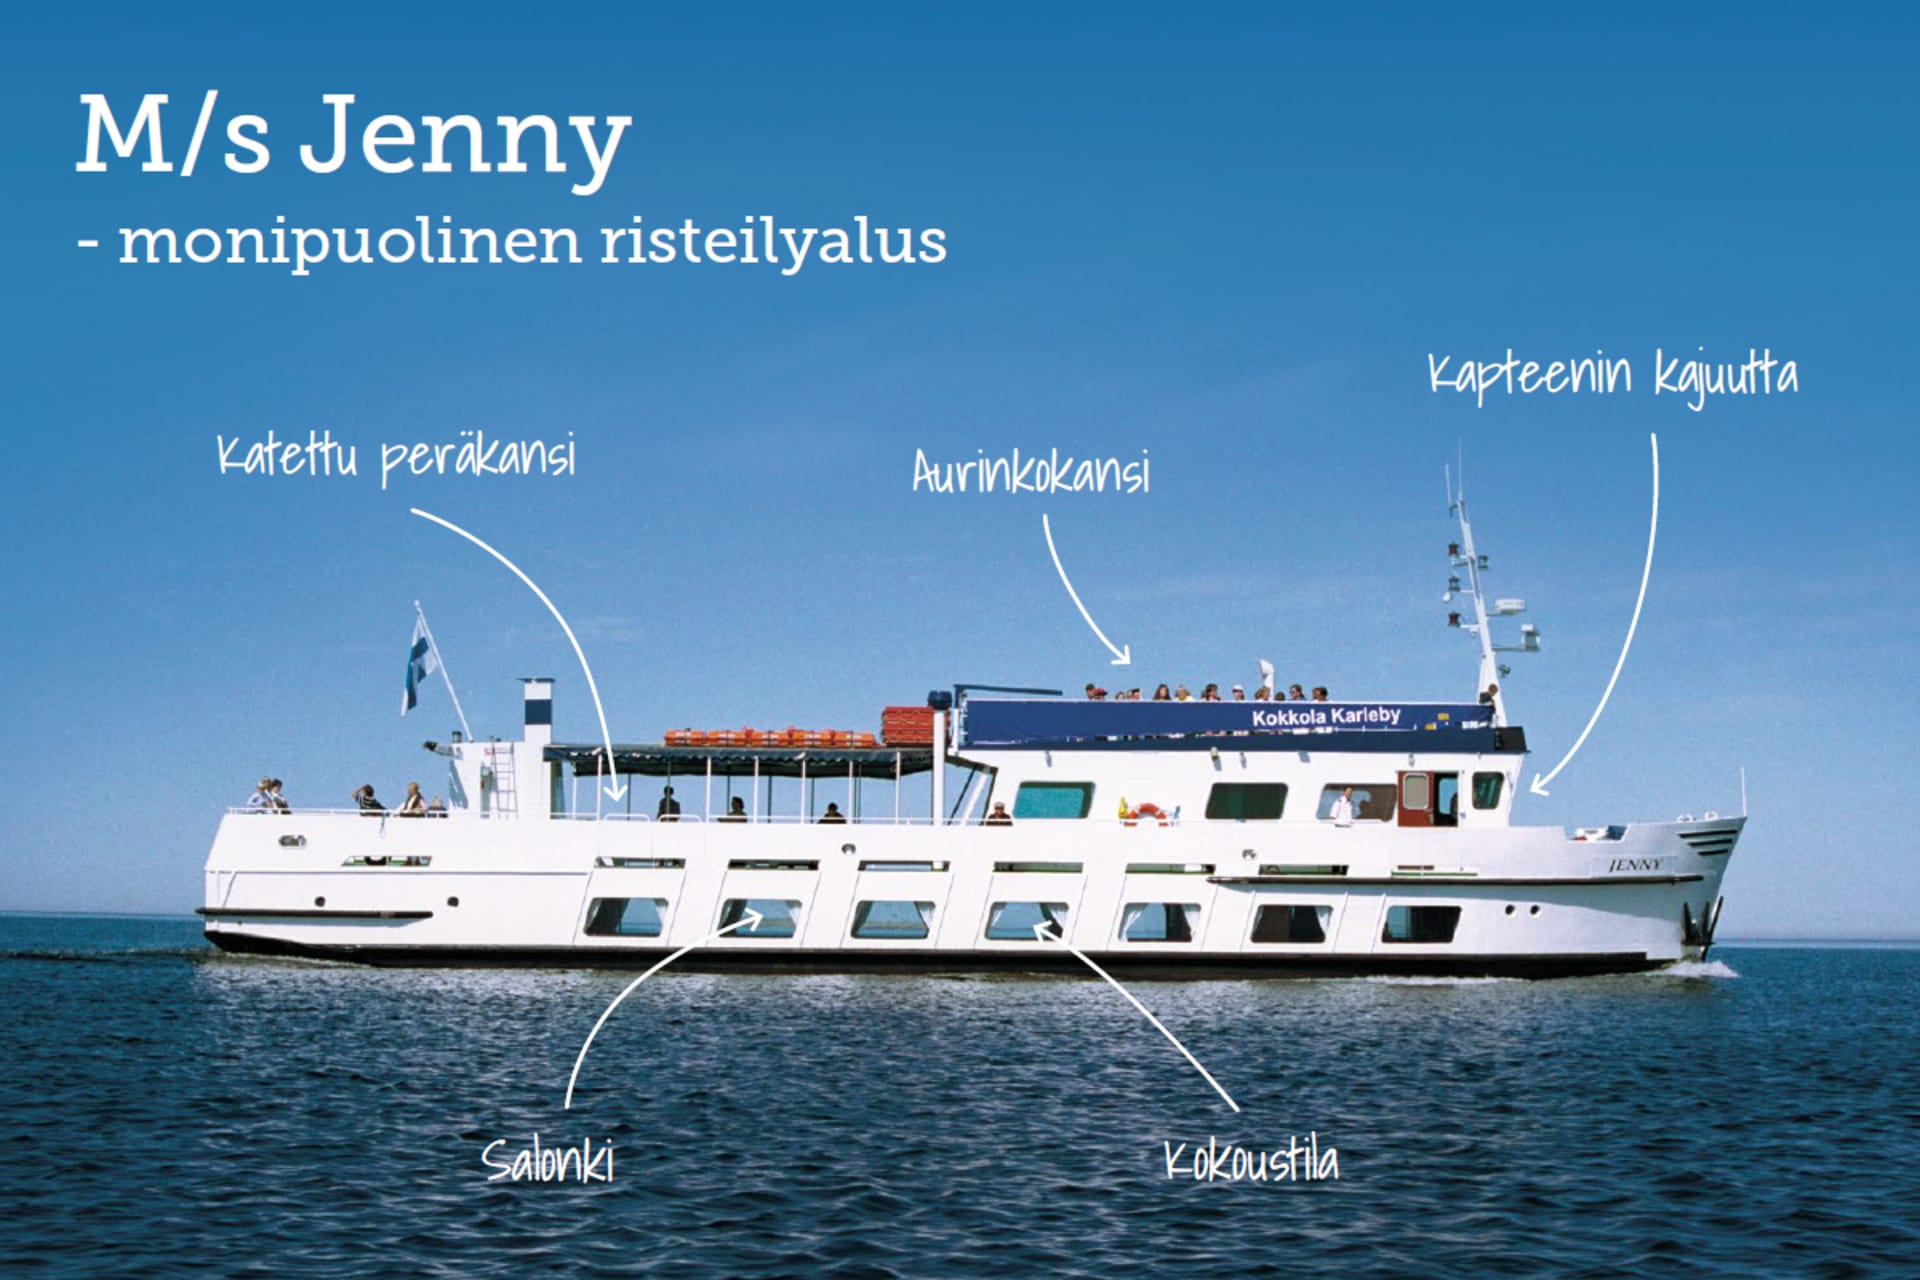 M/S Jenny operates to Tankar lighthouse island